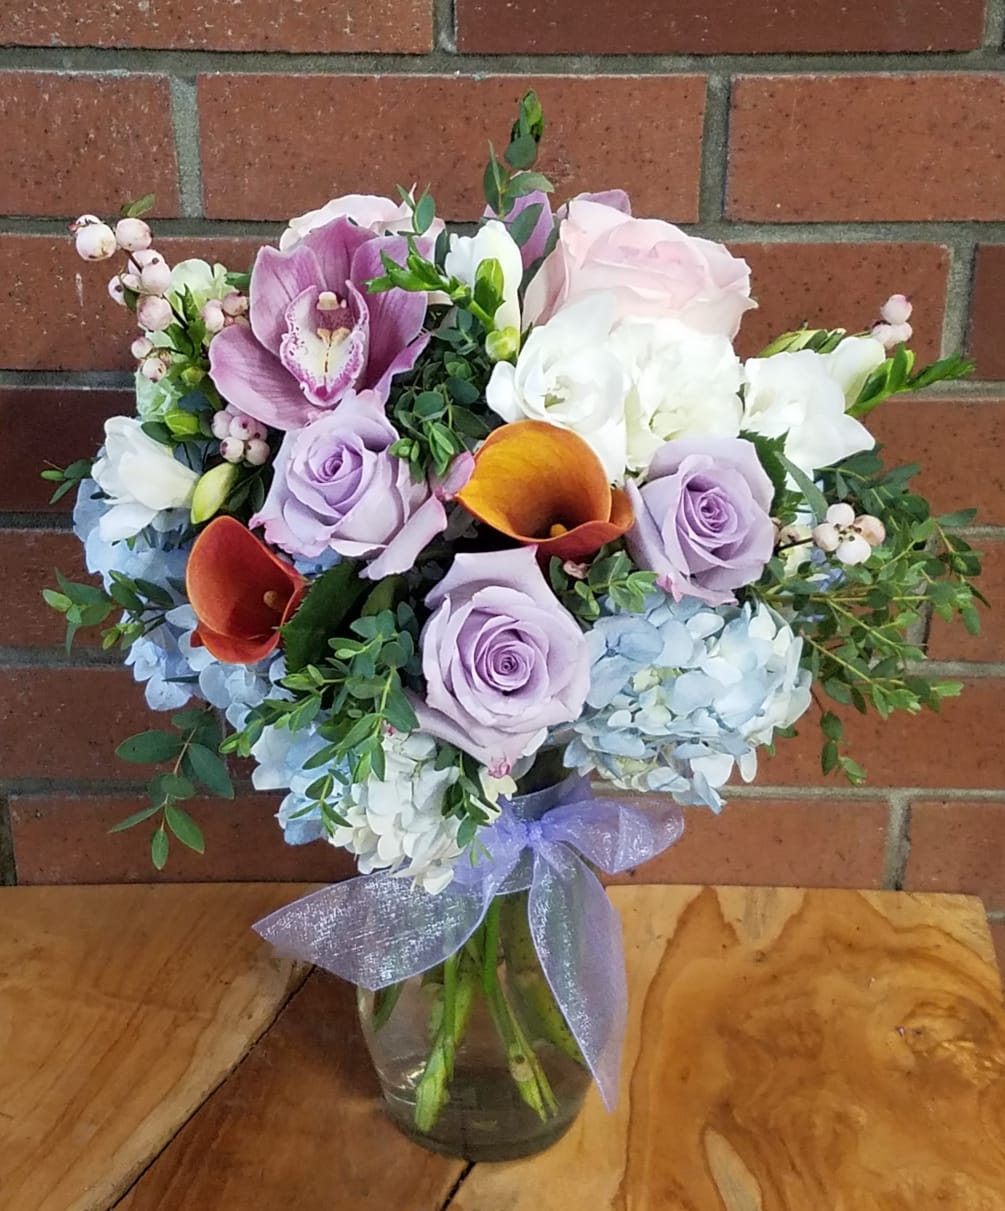 Sweet lavender roses, blue hydrangeas, touches of white freesia, a cymbidium orchid